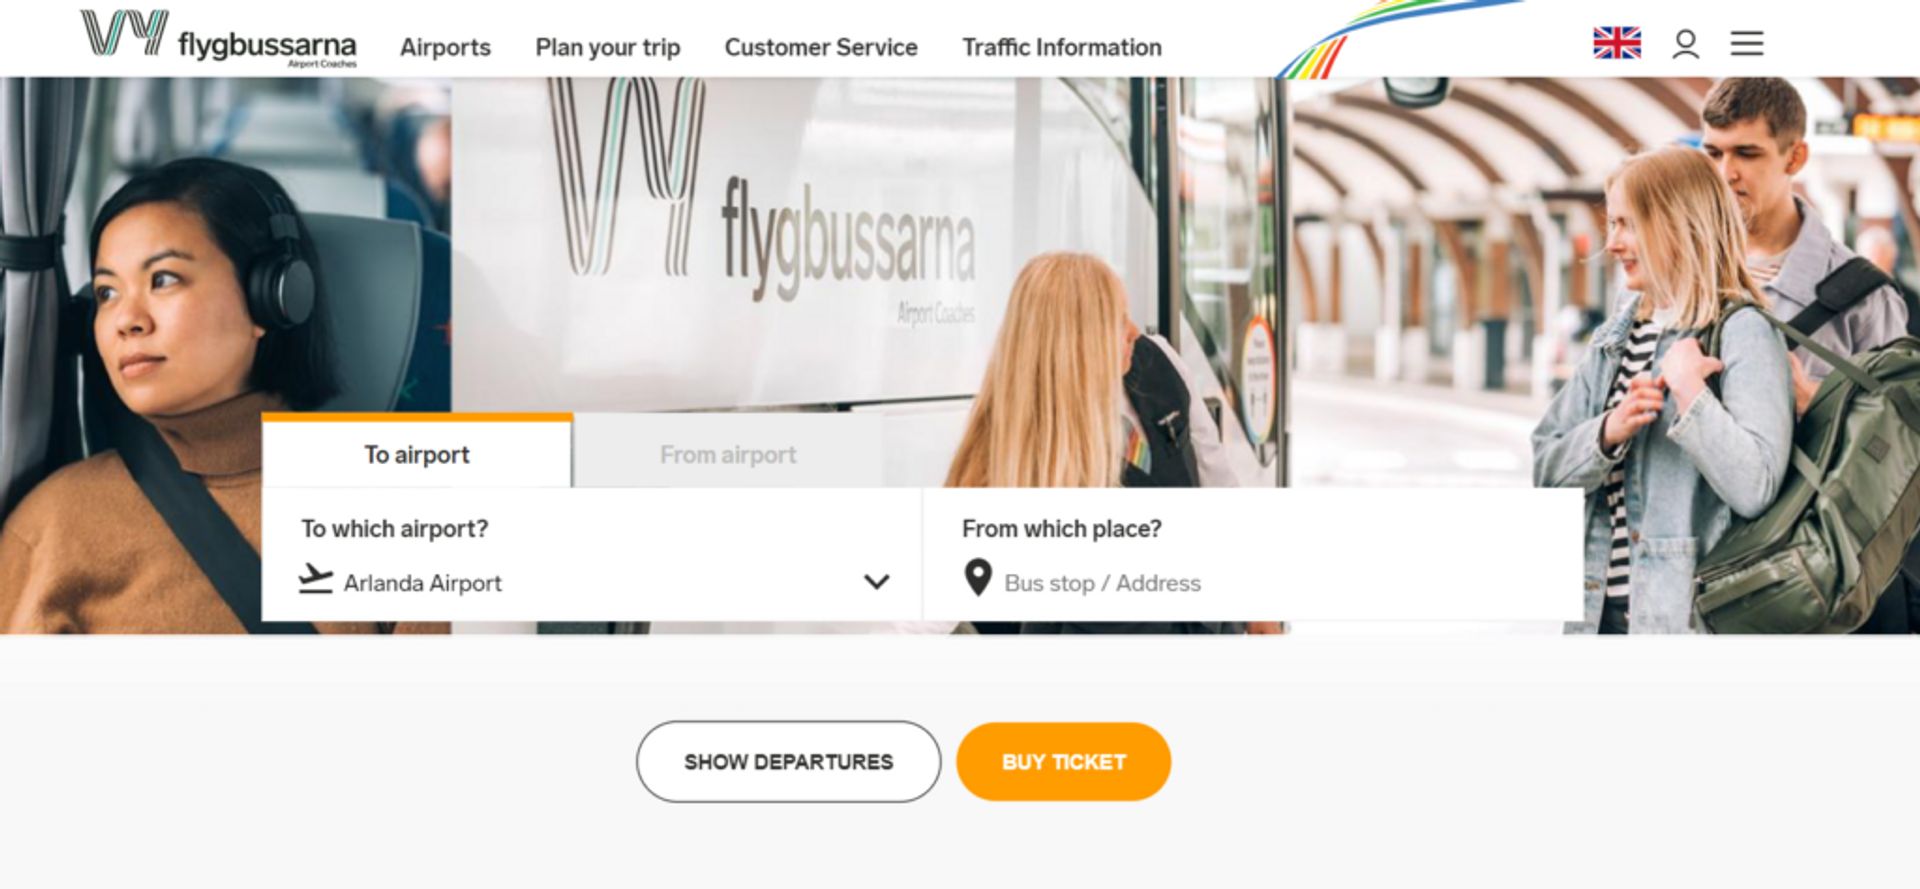 Flygbussarna website. 